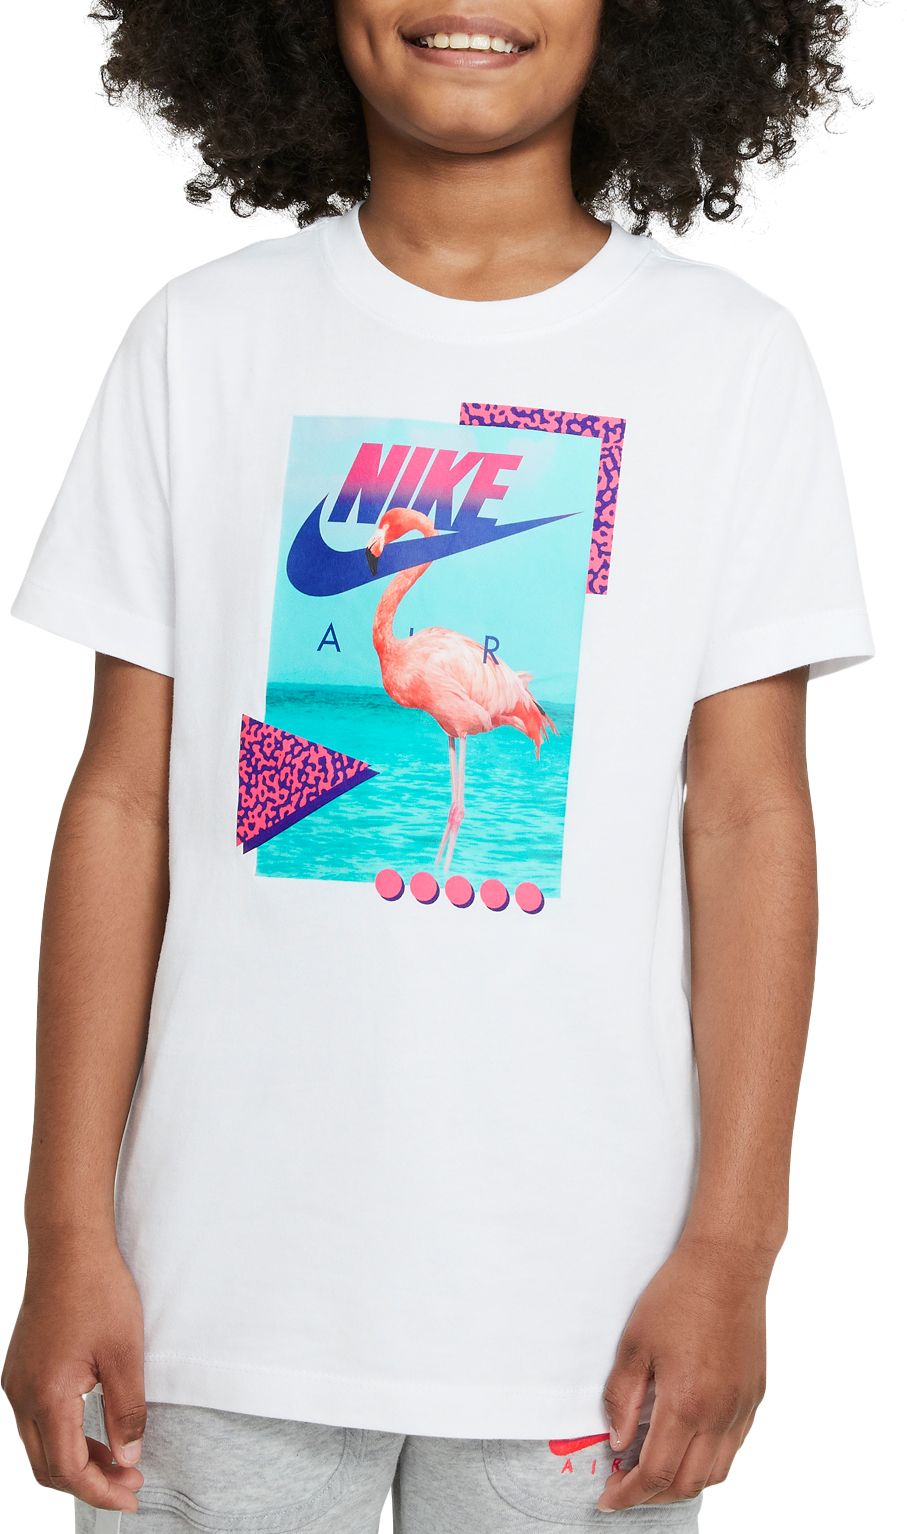 Nike / Boys' Beach Flamingo